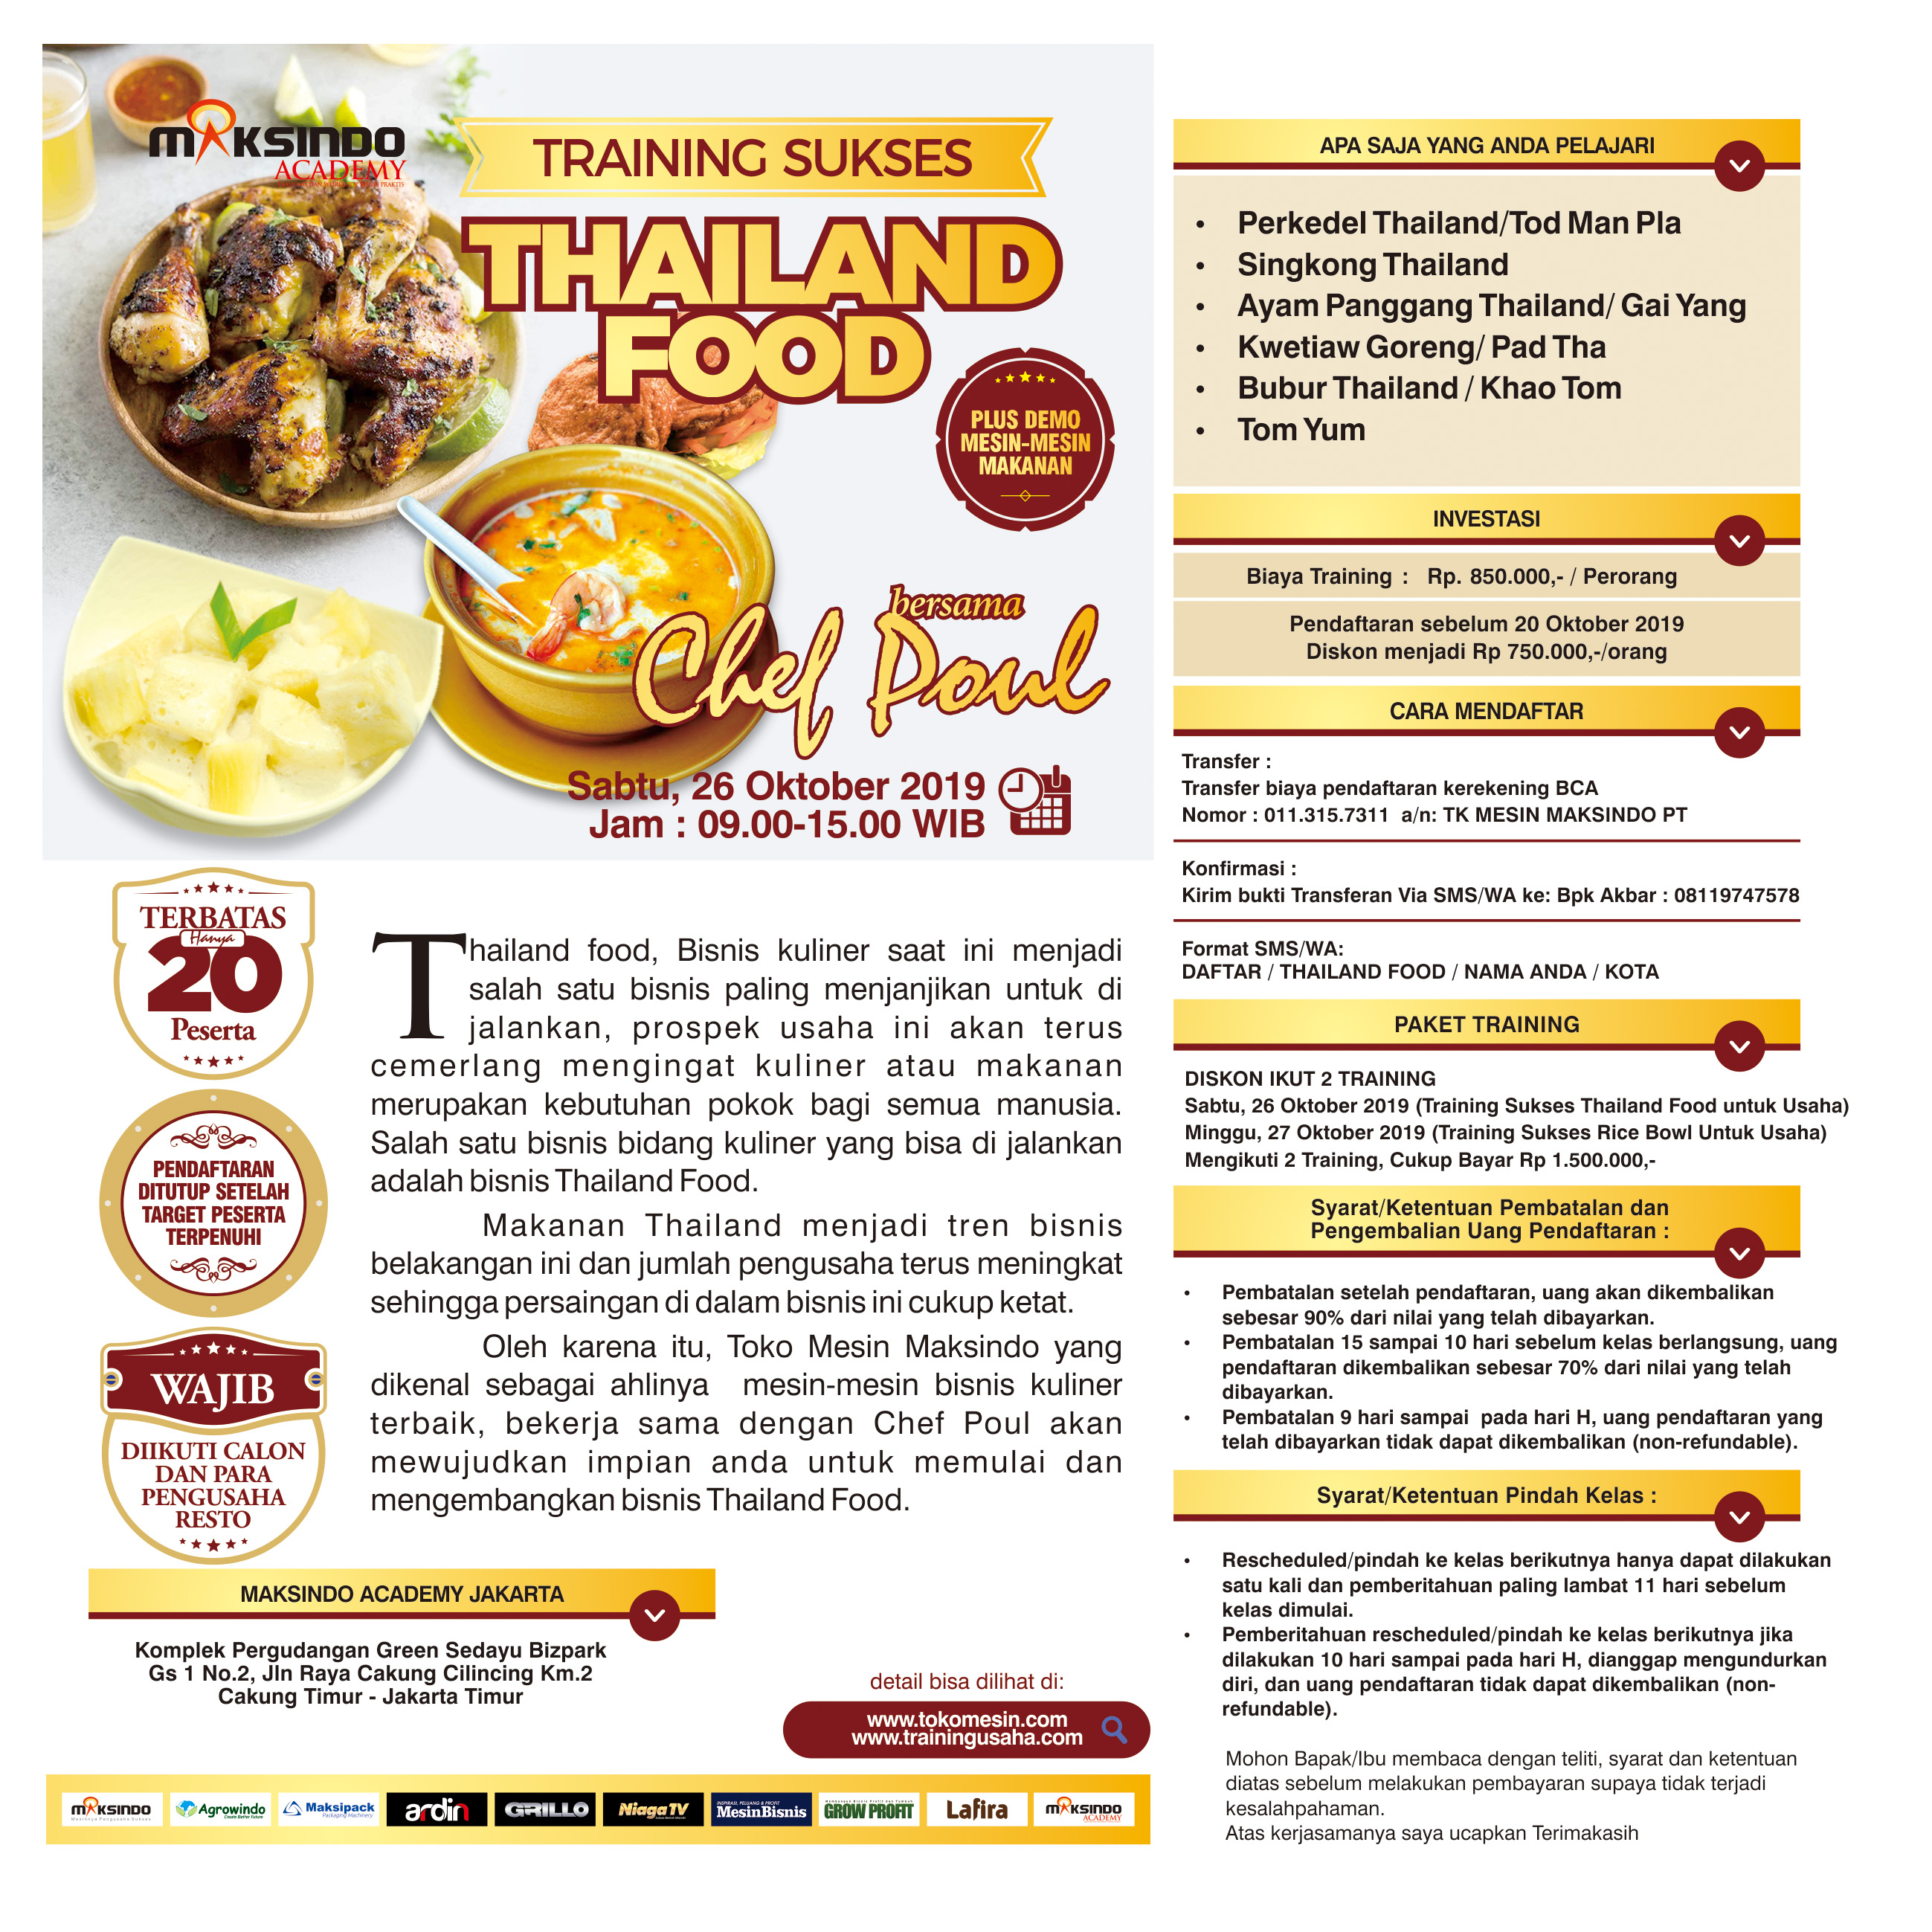 Training Sukses Thailand Food Untuk Usaha, Sabtu 26 Oktober 2019